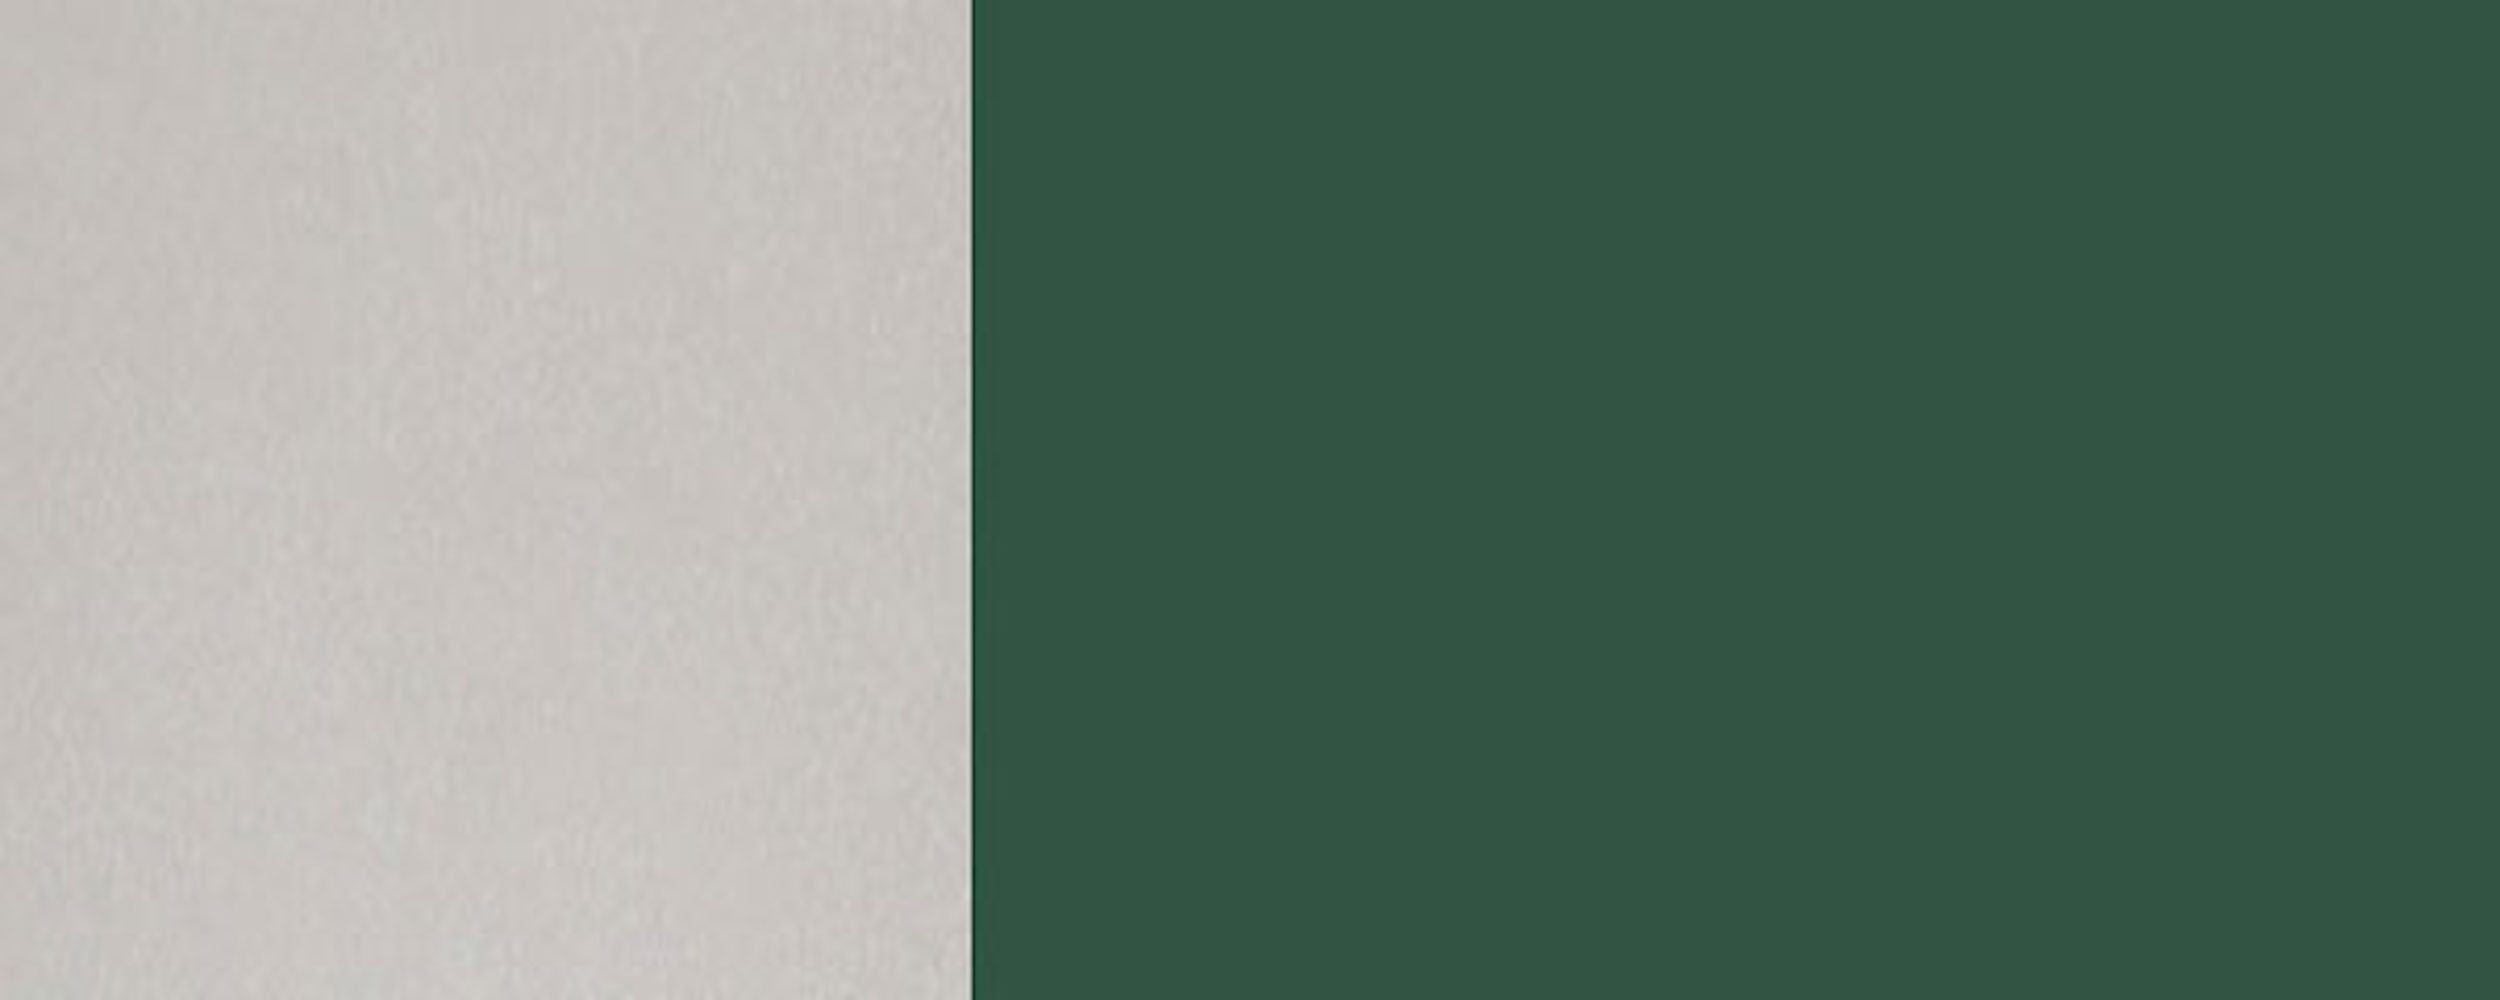 Feldmann-Wohnen Klapphängeschrank Tivoli (Tivoli) Korpusfarbe 1-türig matt wählbar kieferngrün Front- und 60cm